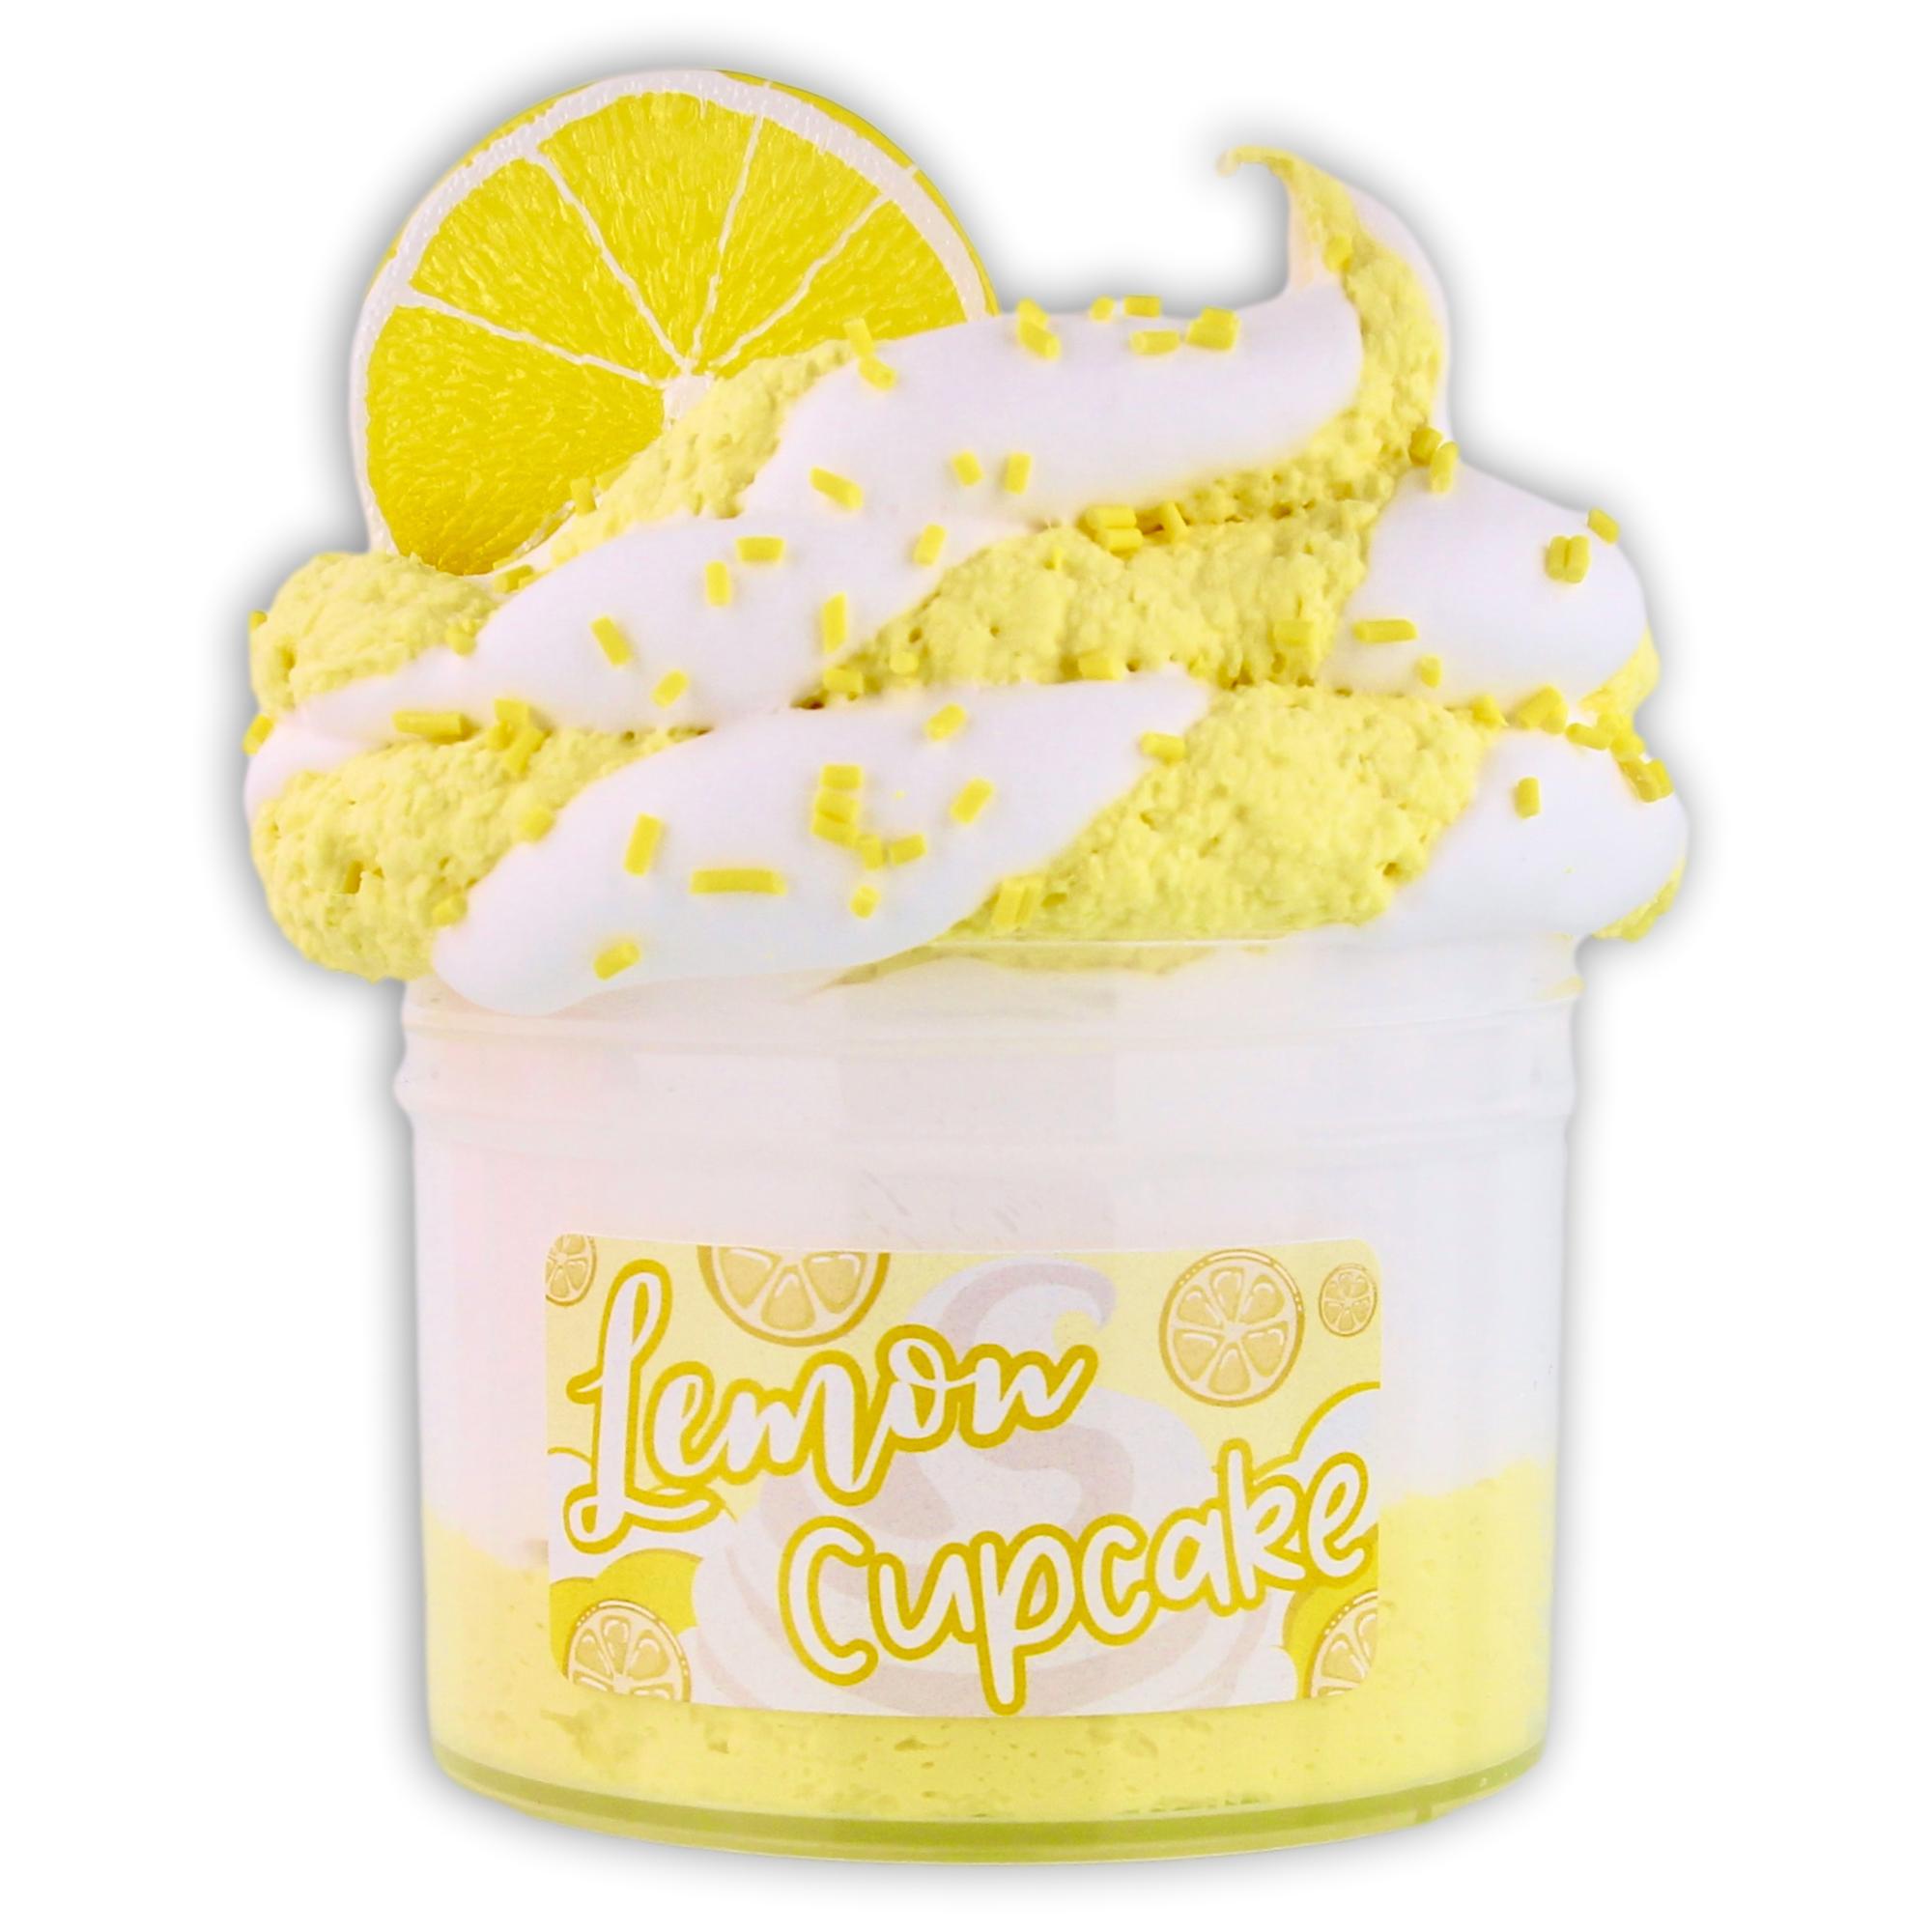 Lemon Cupcake Unique Textured Slime - Shop Slime - Dope Slimes